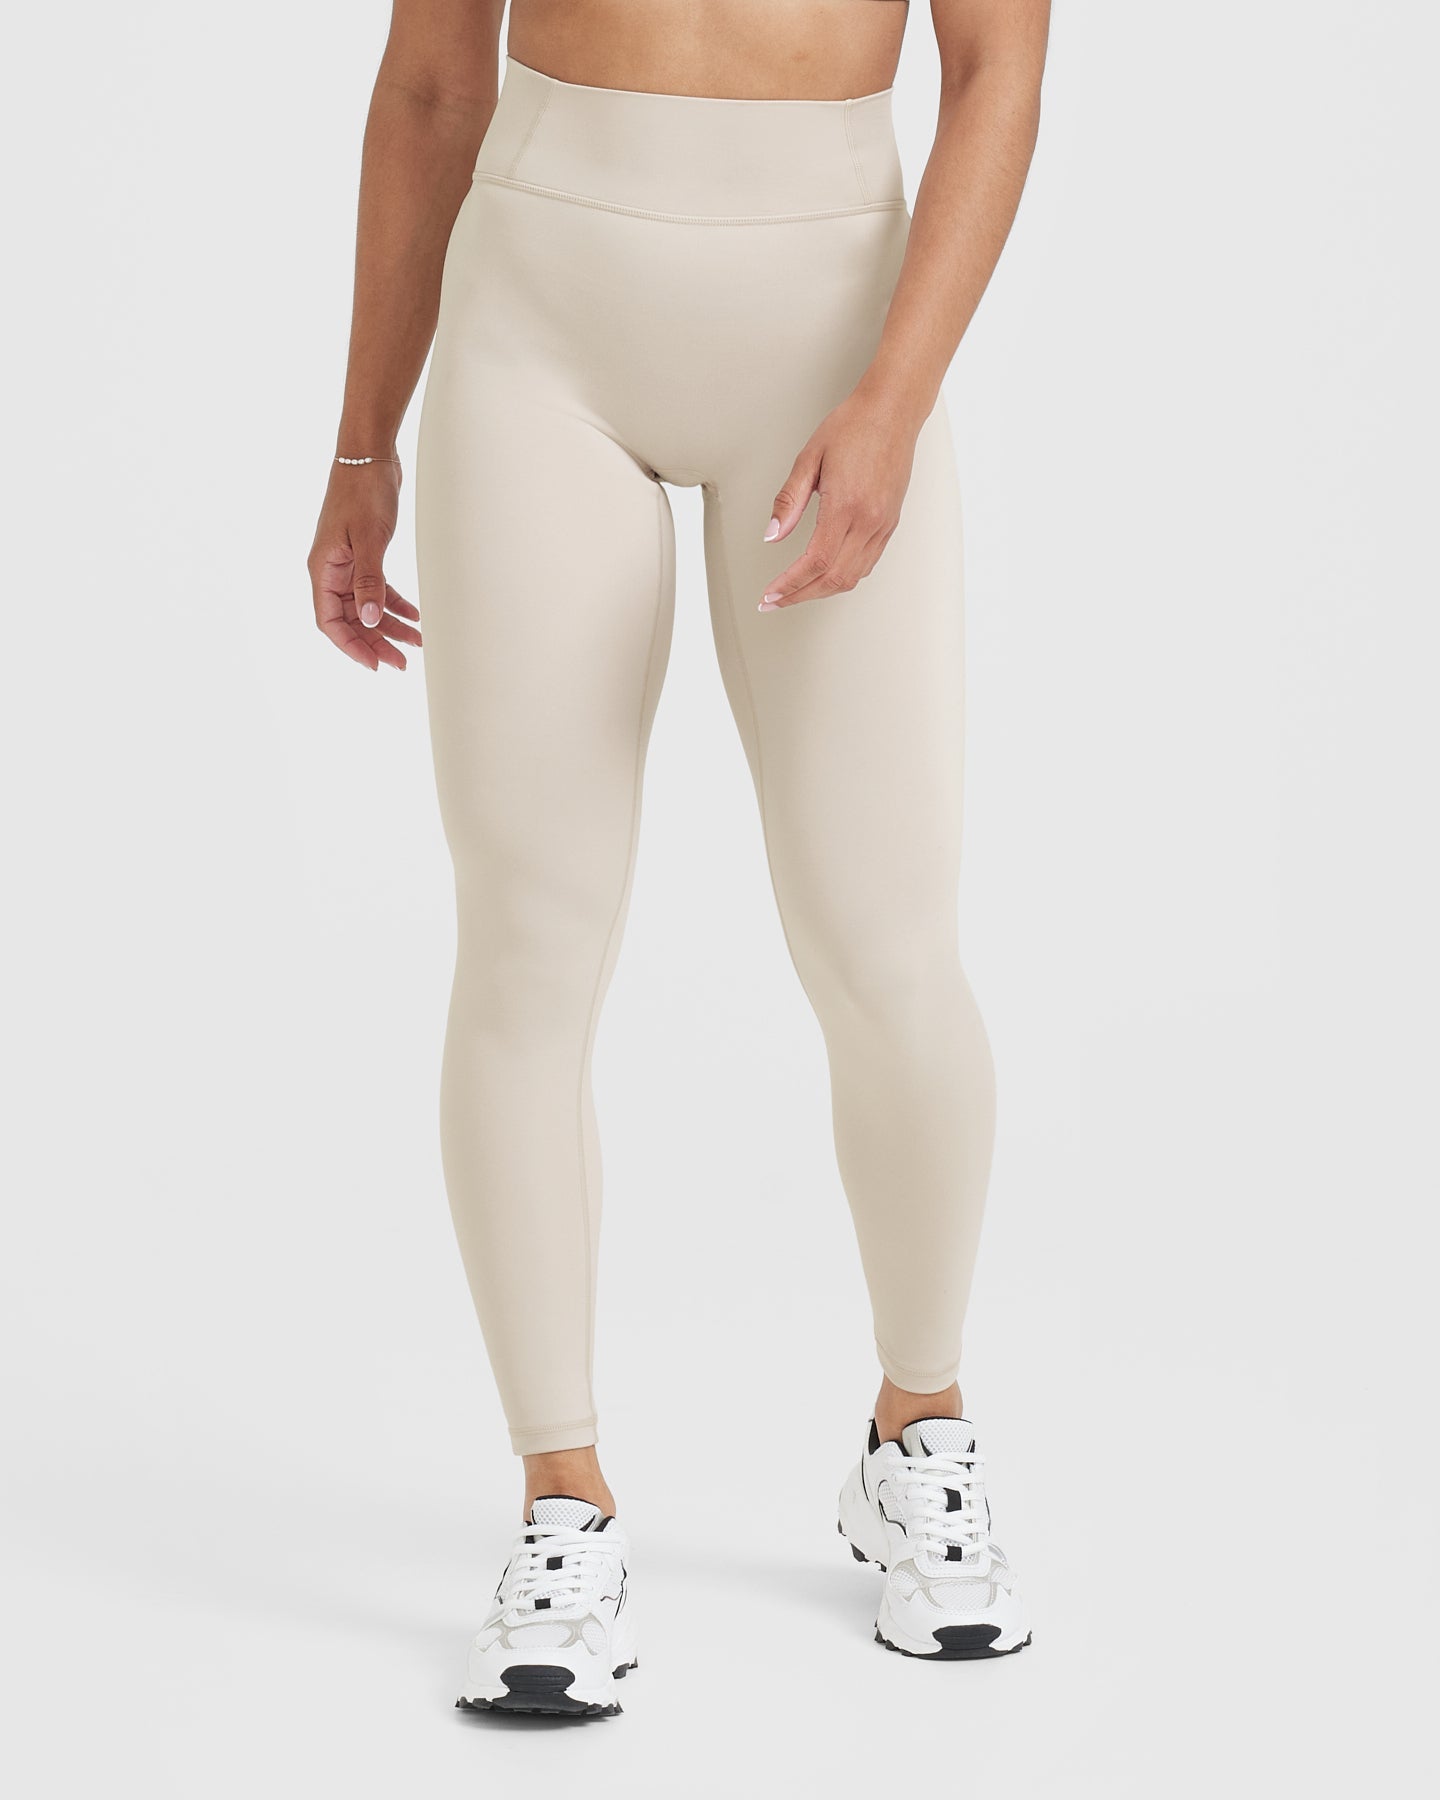 3 Pc Women's White Plus Legging Seamless Shorts Stretch Biker Sexy Solid  Spandex at Amazon Women's Clothing store